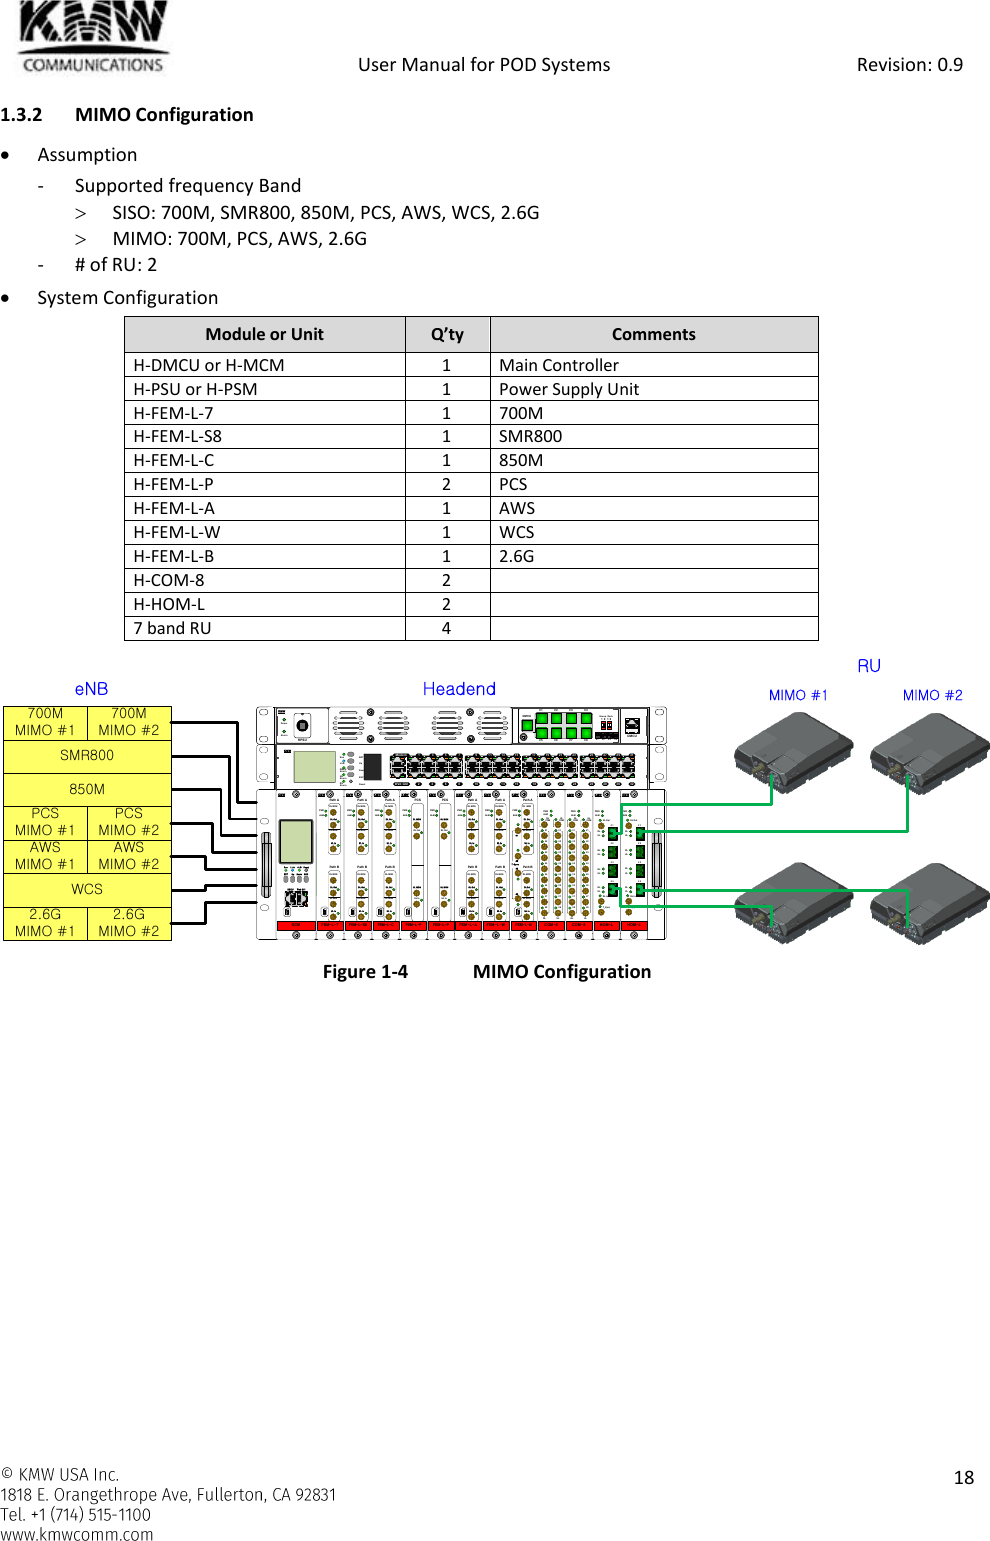            User Manual for POD Systems                                                     Revision: 0.9    18  1.3.2 MIMO Configuration  Assumption - Supported frequency Band   SISO: 700M, SMR800, 850M, PCS, AWS, WCS, 2.6G  MIMO: 700M, PCS, AWS, 2.6G - # of RU: 2  System Configuration Module or Unit Q’ty Comments H-DMCU or H-MCM 1 Main Controller H-PSU or H-PSM 1 Power Supply Unit H-FEM-L-7 1 700M H-FEM-L-S8 1 SMR800 H-FEM-L-C 1 850M H-FEM-L-P 2 PCS H-FEM-L-A 1 AWS H-FEM-L-W 1 WCS H-FEM-L-B 1 2.6G H-COM-8 2  H-HOM-L 2  7 band RU 4    Figure 1-4  MIMO Configuration   FEM-L-WUL MONDL MONDL OutUL InUL MONDL MONDL OutUL InPWRALMPath APath BKMWFEM-L-AUL MONDL MONDL OutUL InUL MONDL MONDL OutUL InPWRALMPath APath BKMWFEM-L-7UL MONDL MONDL OutUL InUL MonDL MONDL OutUL InPWRALMPath APath BKMWFEM-L-S8UL MONDL MONDL OutUL InUL MONDL MONDL OutUL InPWRALMPath APath BKMWFEM-L-CUL MONDL MONDL OutUL InUL MONDL MONDL OutUL InPWRALMPath APath BKMWFEM-L-BUL MONDL  MONDLOutUL InUL MONDL MONDL OutUL InPWRALMPath APath B#1#2#3#4T-SyncKMWFEM-L-PDL OutUL MONUL InDL MONPWRALMPCSKMWRun Link ALM ResetENT Up Down ESCDMCU Web GUISCMKMWCOM-8PWRALMDLCOM#1#2#3#4#5#6#7#8#1#2#3#4#5#6#7#8ULCOMDL ULKMWHOM-LPWRALMUL OutDL InT_SyncDLULDLULDLULDLULKMW# 1# 2# 3# 4ENTUpDownESCResetRunDMCUAlarmLinkHEAlarmRUAlarm12345 76 89 11 13 1510 12 14 1617 19 21 2318 20 22 2425 27 29 3126 28 30 32ModemWeb GUIKMWDMCUHPSUPowerAlarm#1             #2             #3             #4#5             #6             #7             #8DMCU   #1     #2     #3     #41 2  1 2Group  RackKMW700MMIMO #2eNBPCSMIMO #2AWSMIMO #22.6GMIMO #2HeadendRUFEM-L-PDL OutUL MONUL InDL MONPWRALMPCSKMW700MMIMO #1SMR800850MPCSMIMO #1AWSMIMO #1WCS2.6GMIMO #1 HOM-LPWRALMUL OutDL InT_SyncDLULDLULDLULDLULKMW# 1# 2# 3# 4MIMO #1 MIMO #2COM-8PWRALMDLCOM#1#2#3#4#5#6#7#8#1#2#3#4#5#6#7#8ULCOMDL ULKMW